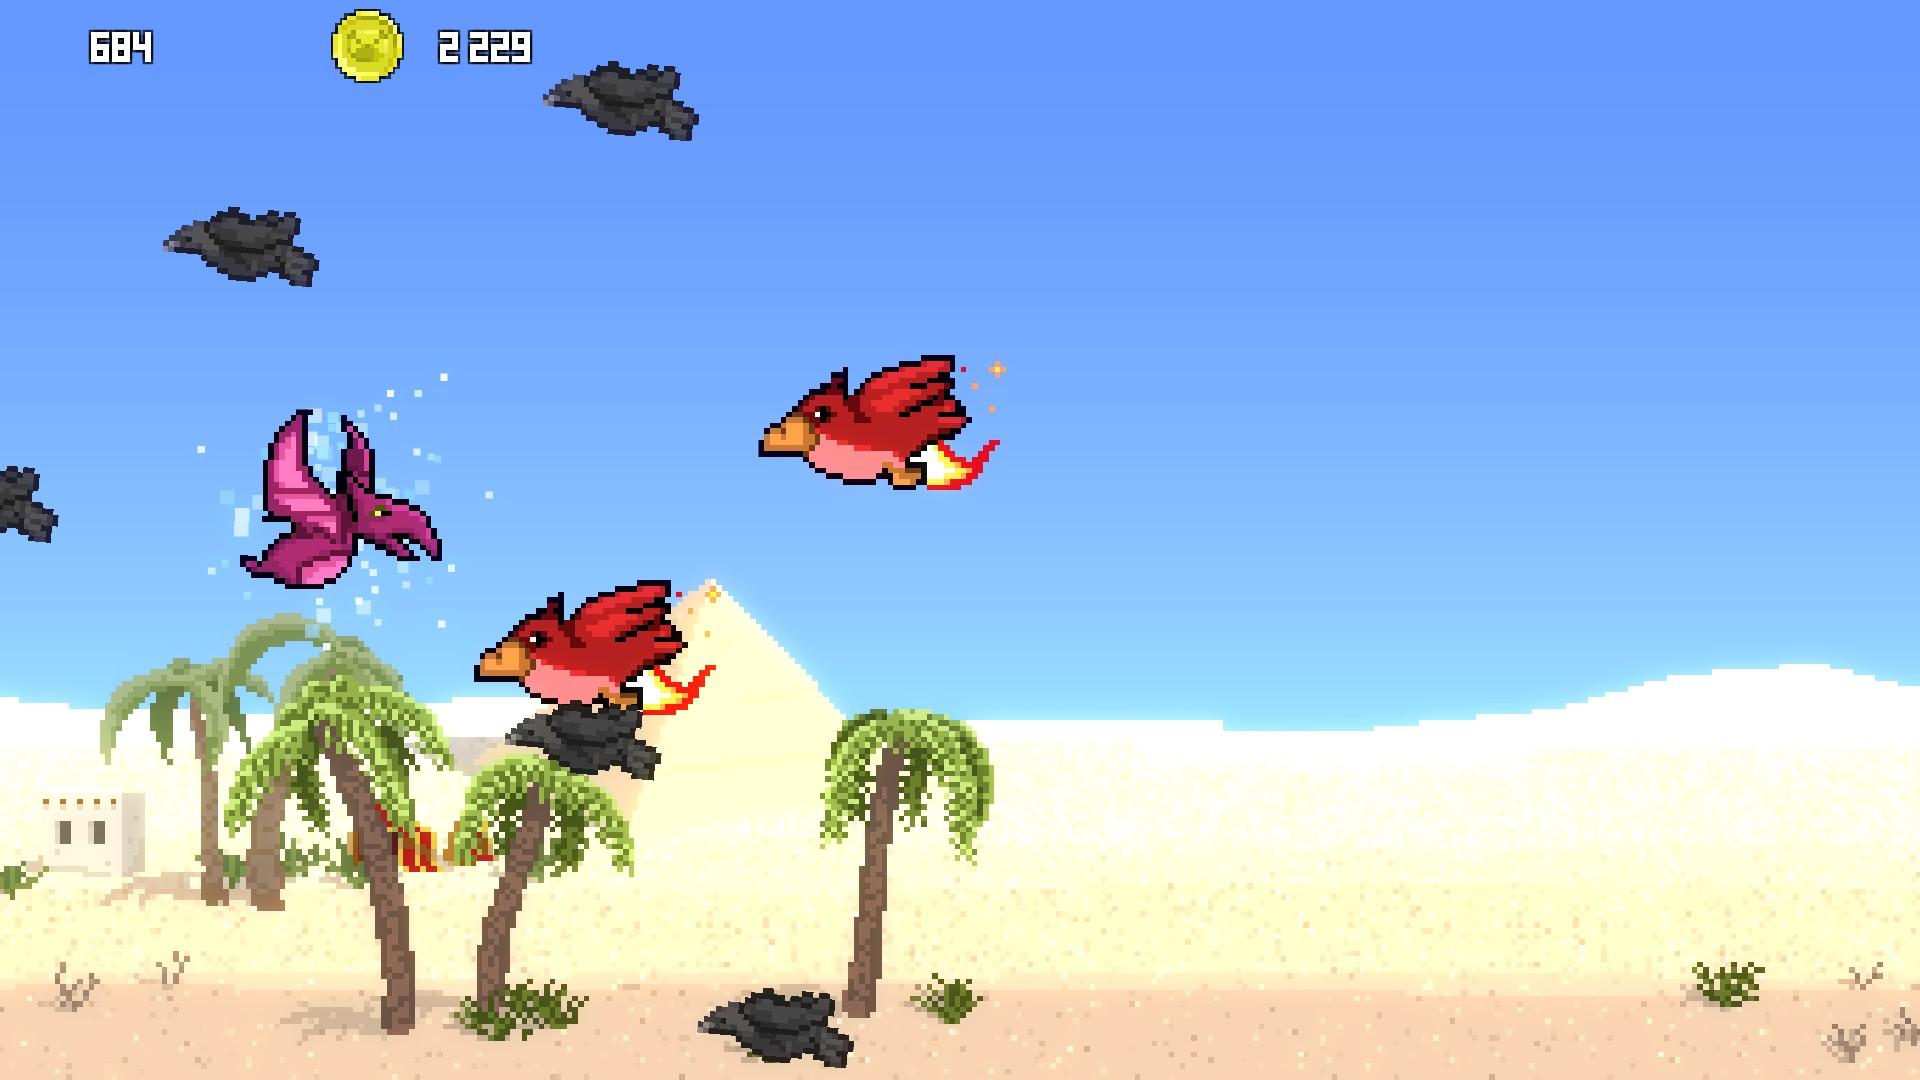 Screenshot №9 from game Super Mega Neo Pug